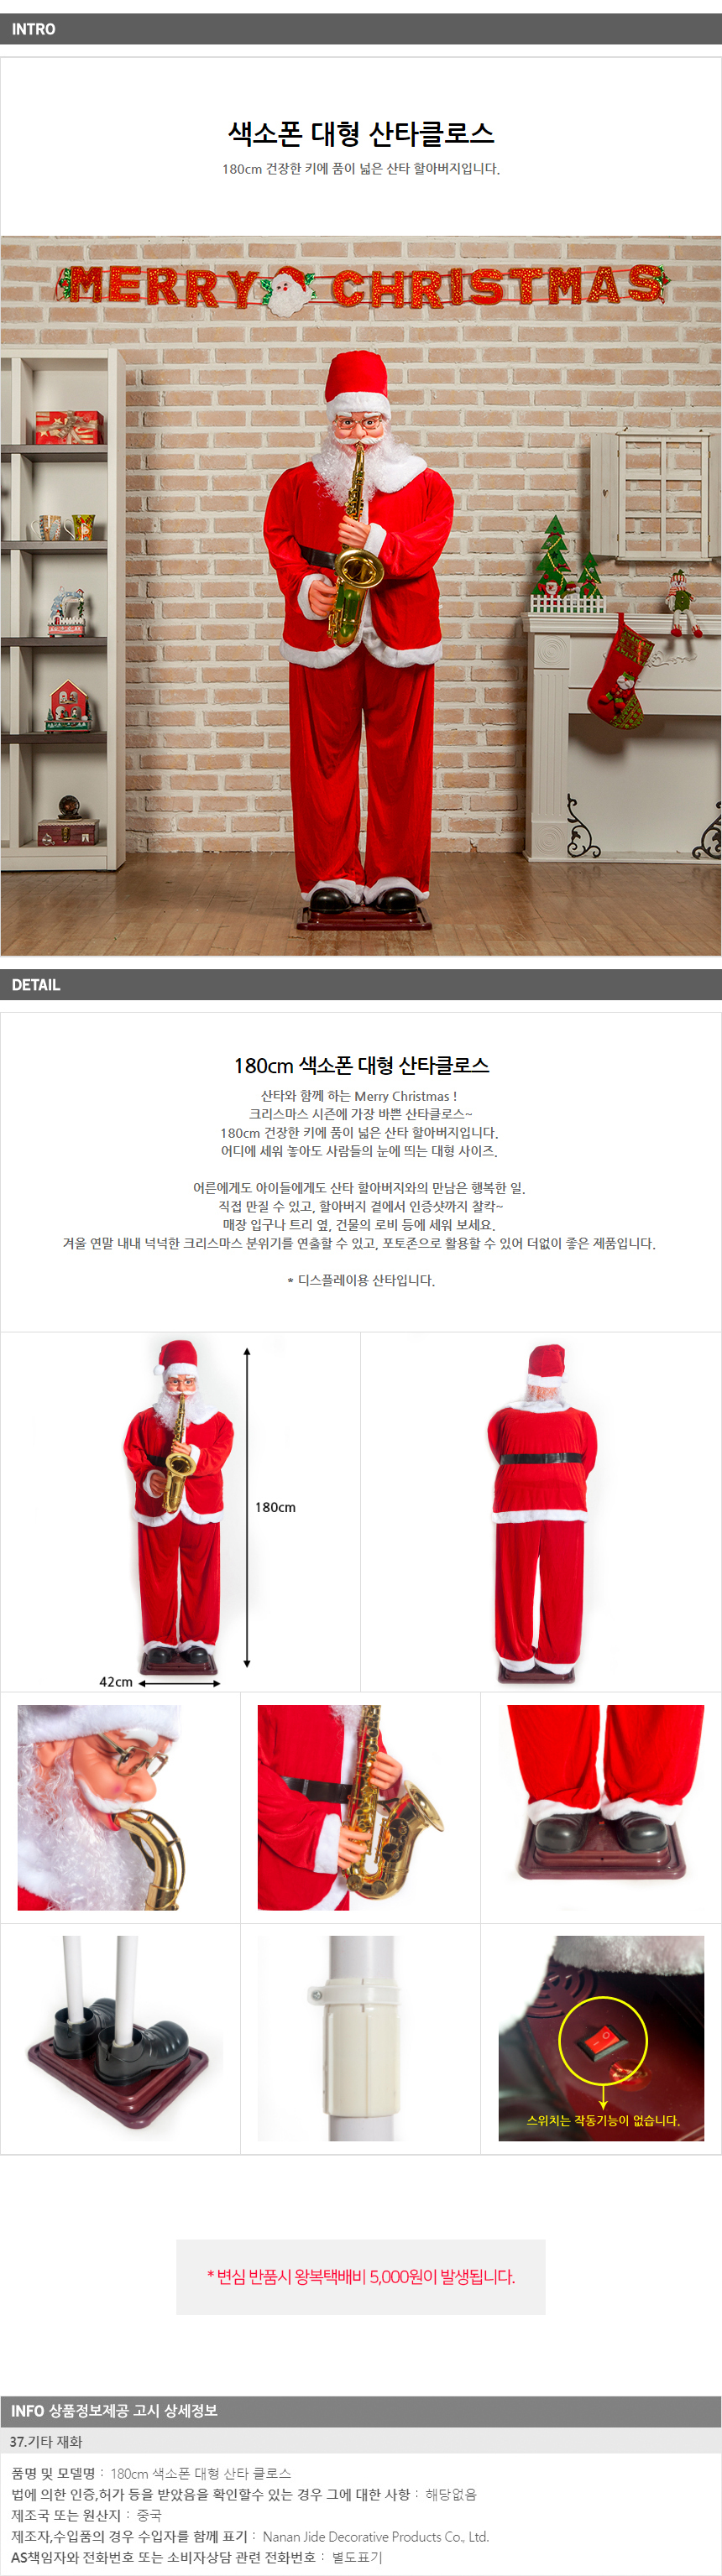 180cm 대형 산타인형 성탄 음악회 크리스마스장식소품